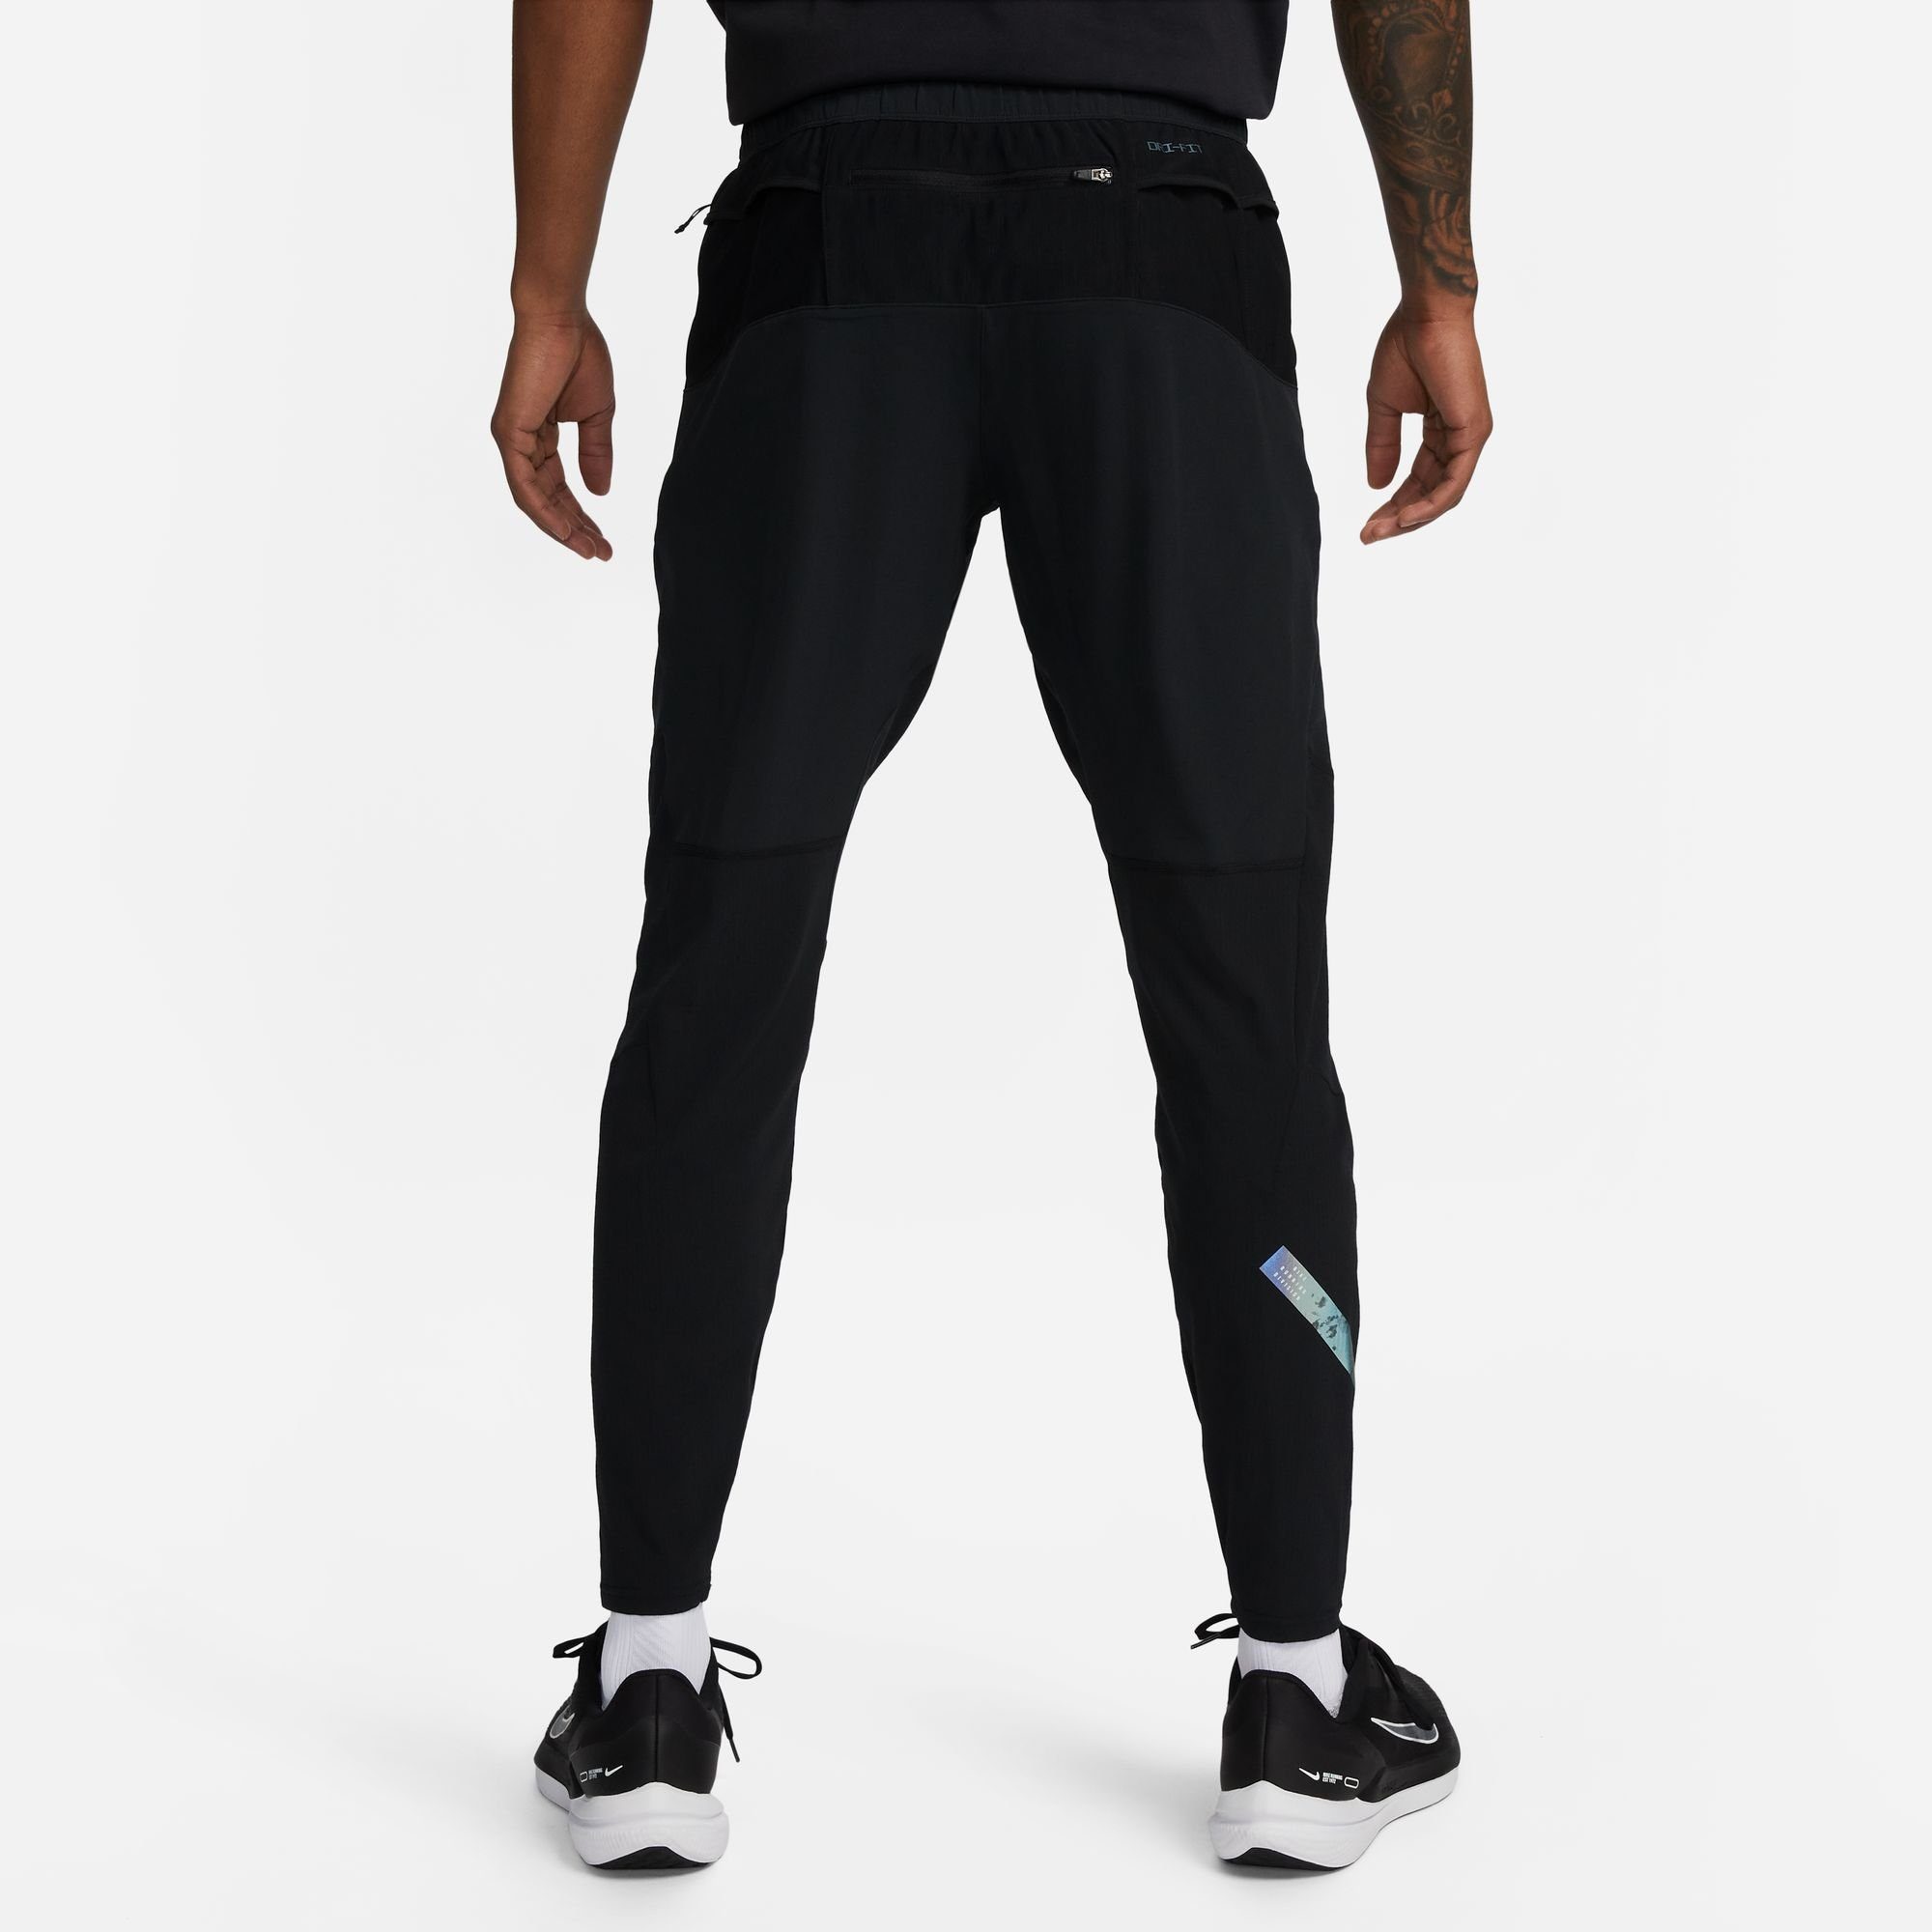 MEN'S Nike DIVISION RUNNING DRI-FIT PHENOM Laufhose PANTS RUN